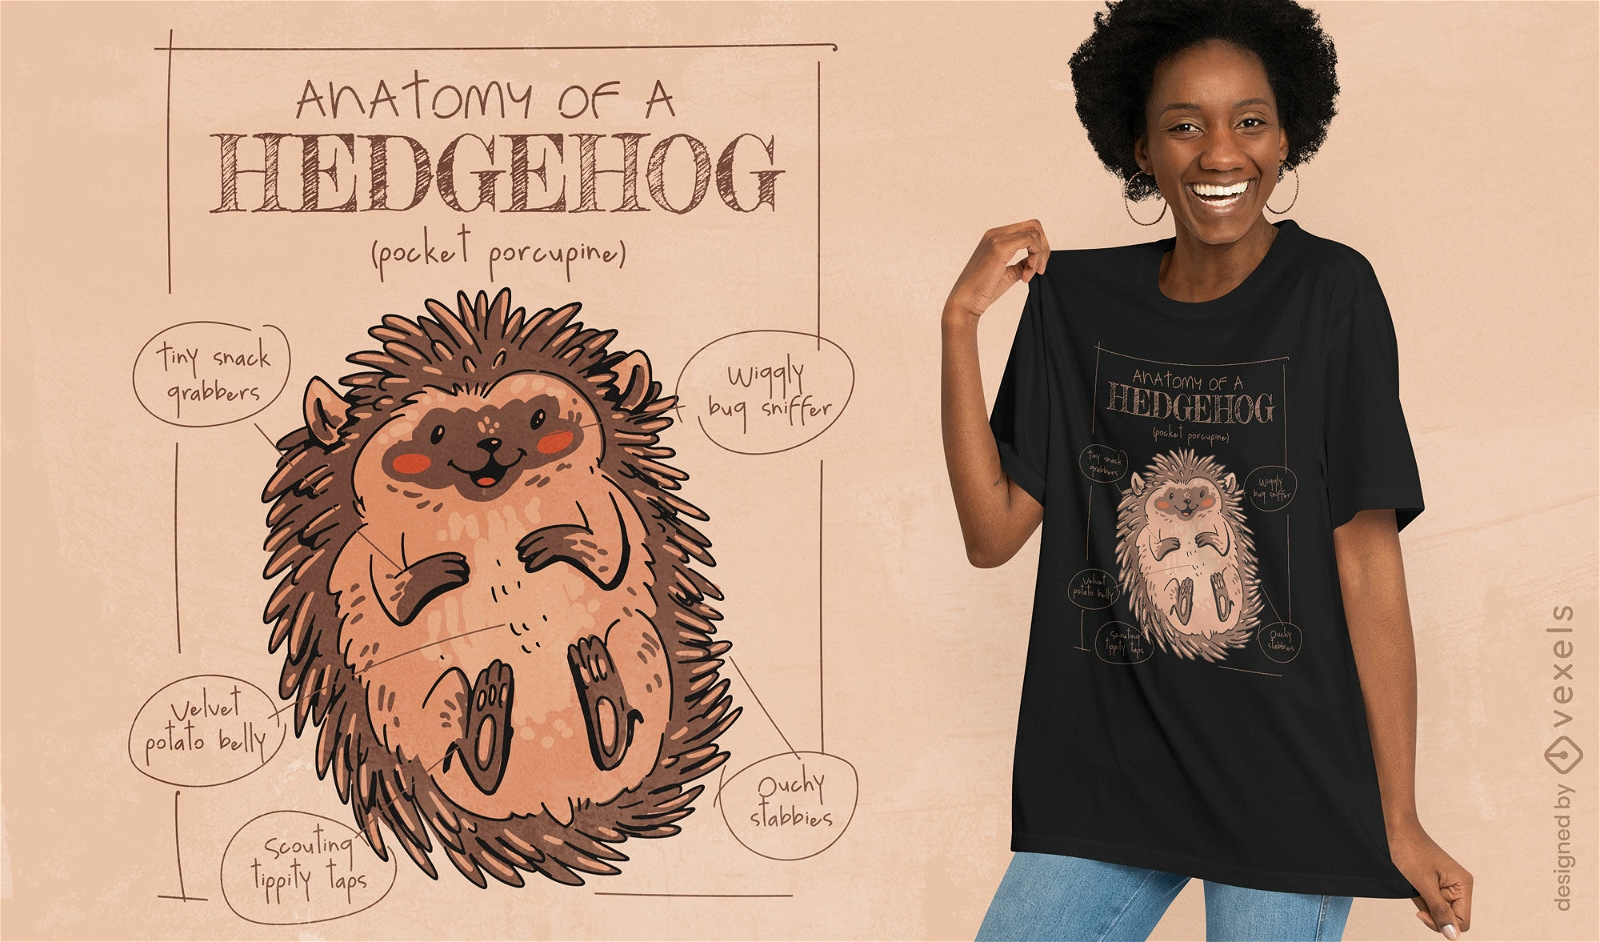 Hedgehog anatomy t-shirt design